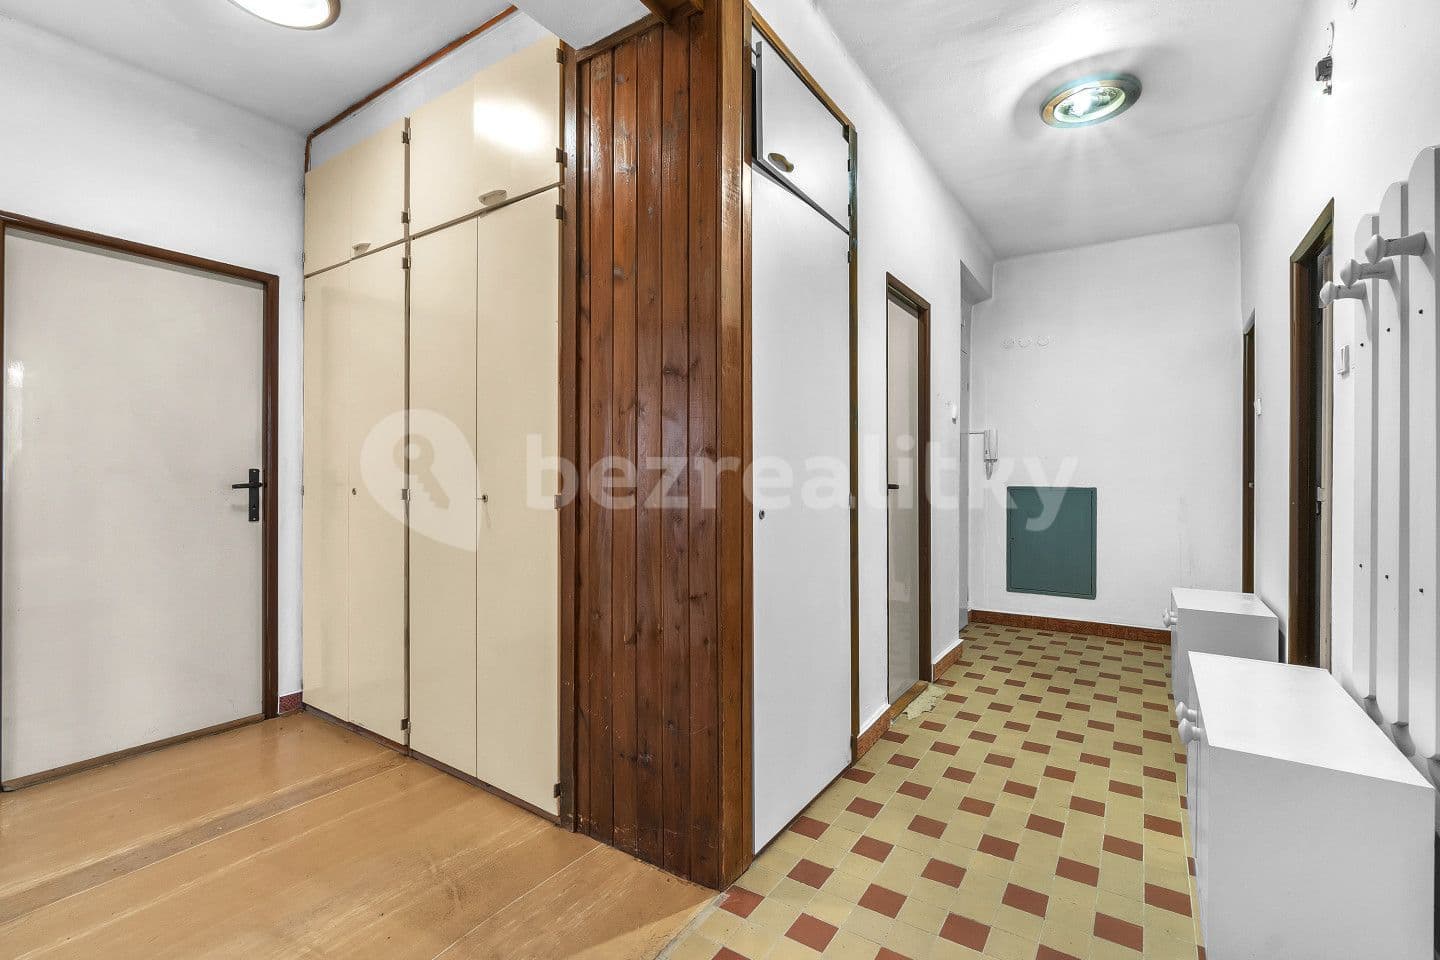 Predaj bytu 3-izbový 92 m², Školní, Ostroměř, Královéhradecký kraj